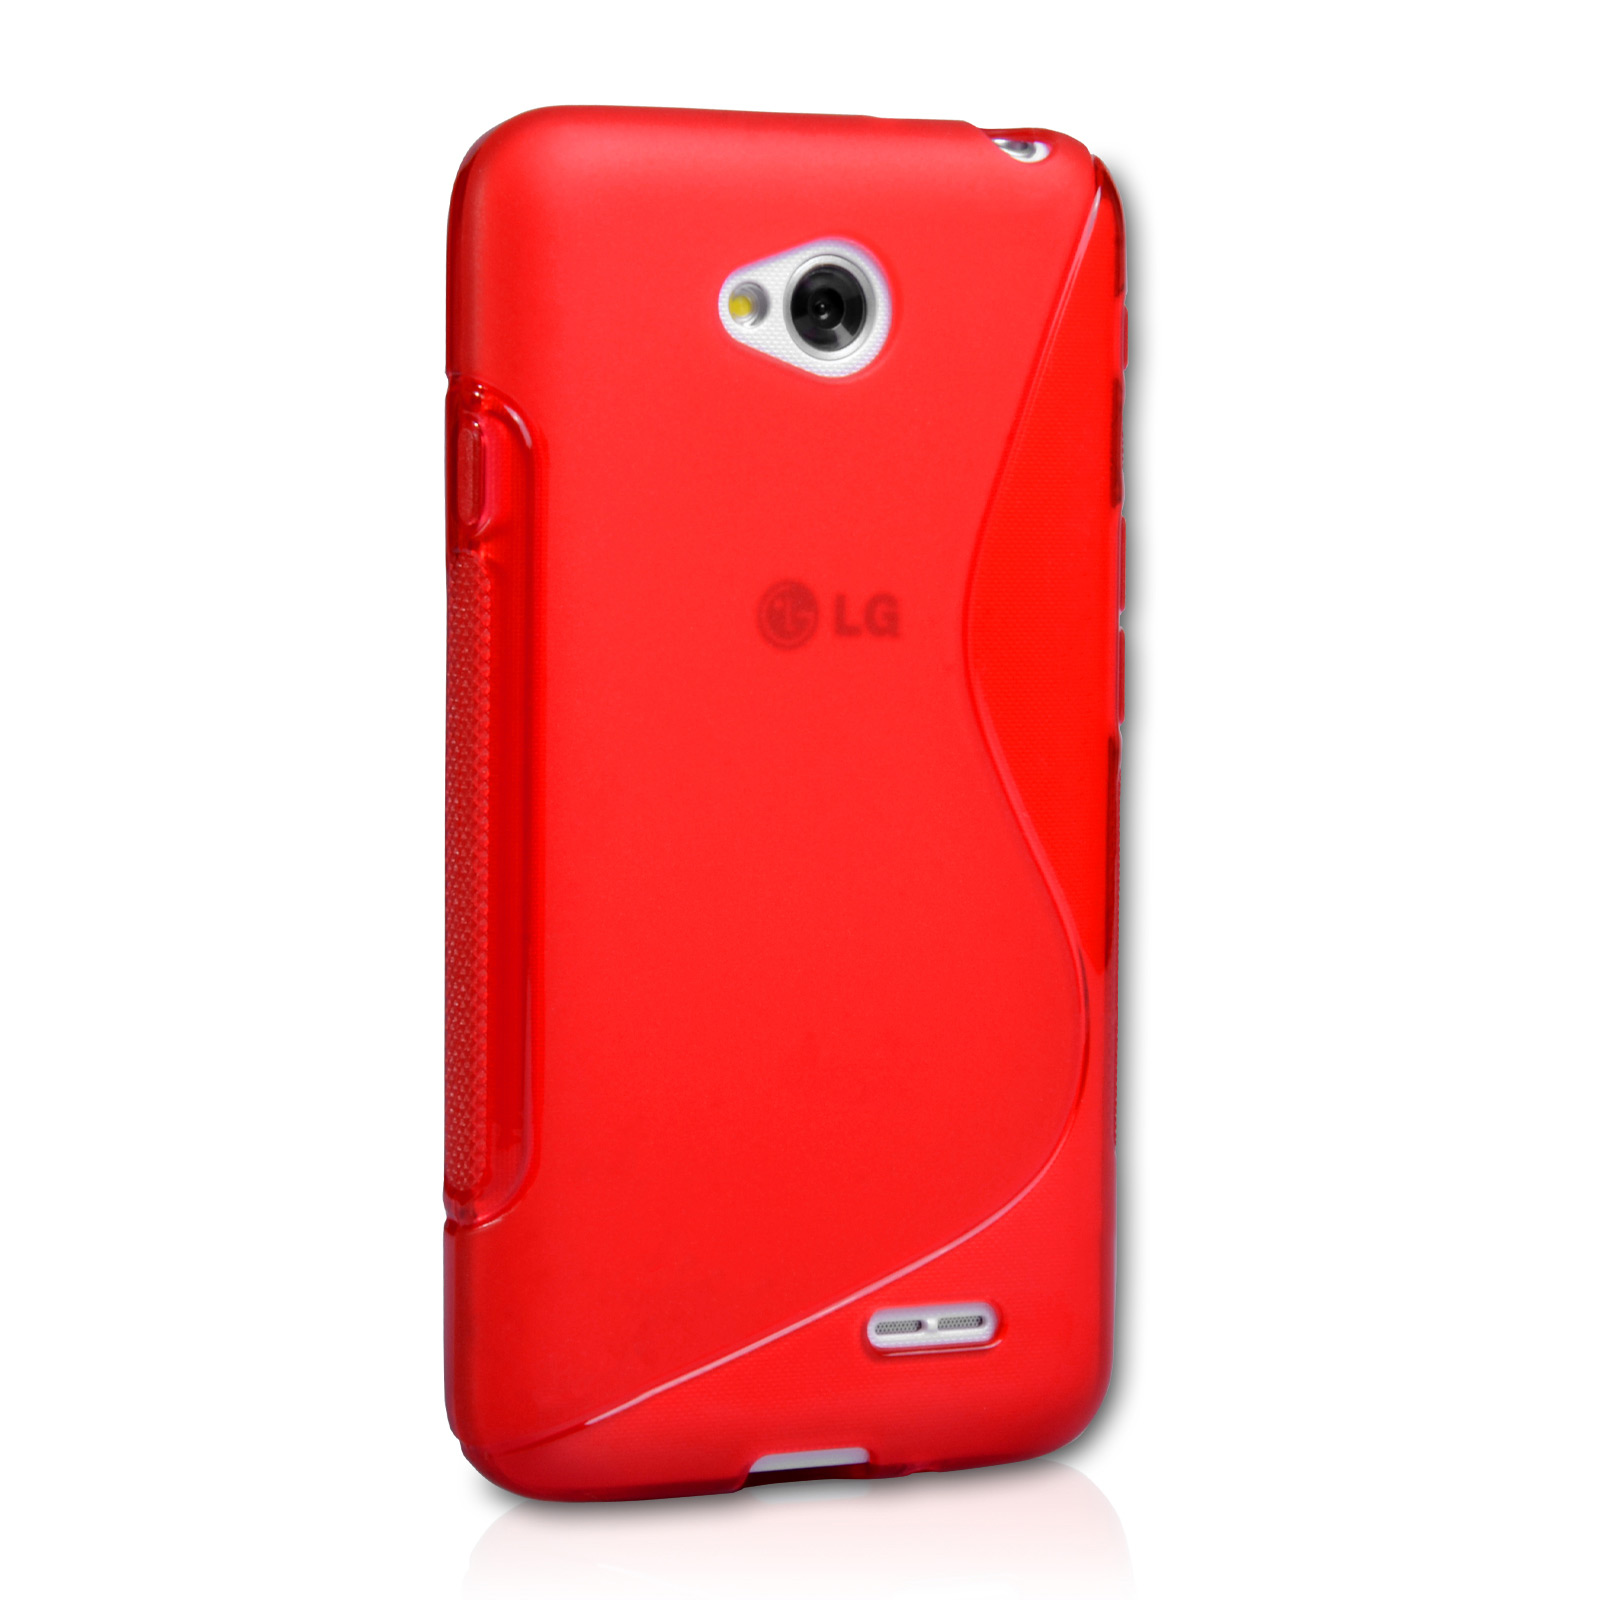 Caseflex LG L70 Silicone Gel S-Line Case - Red